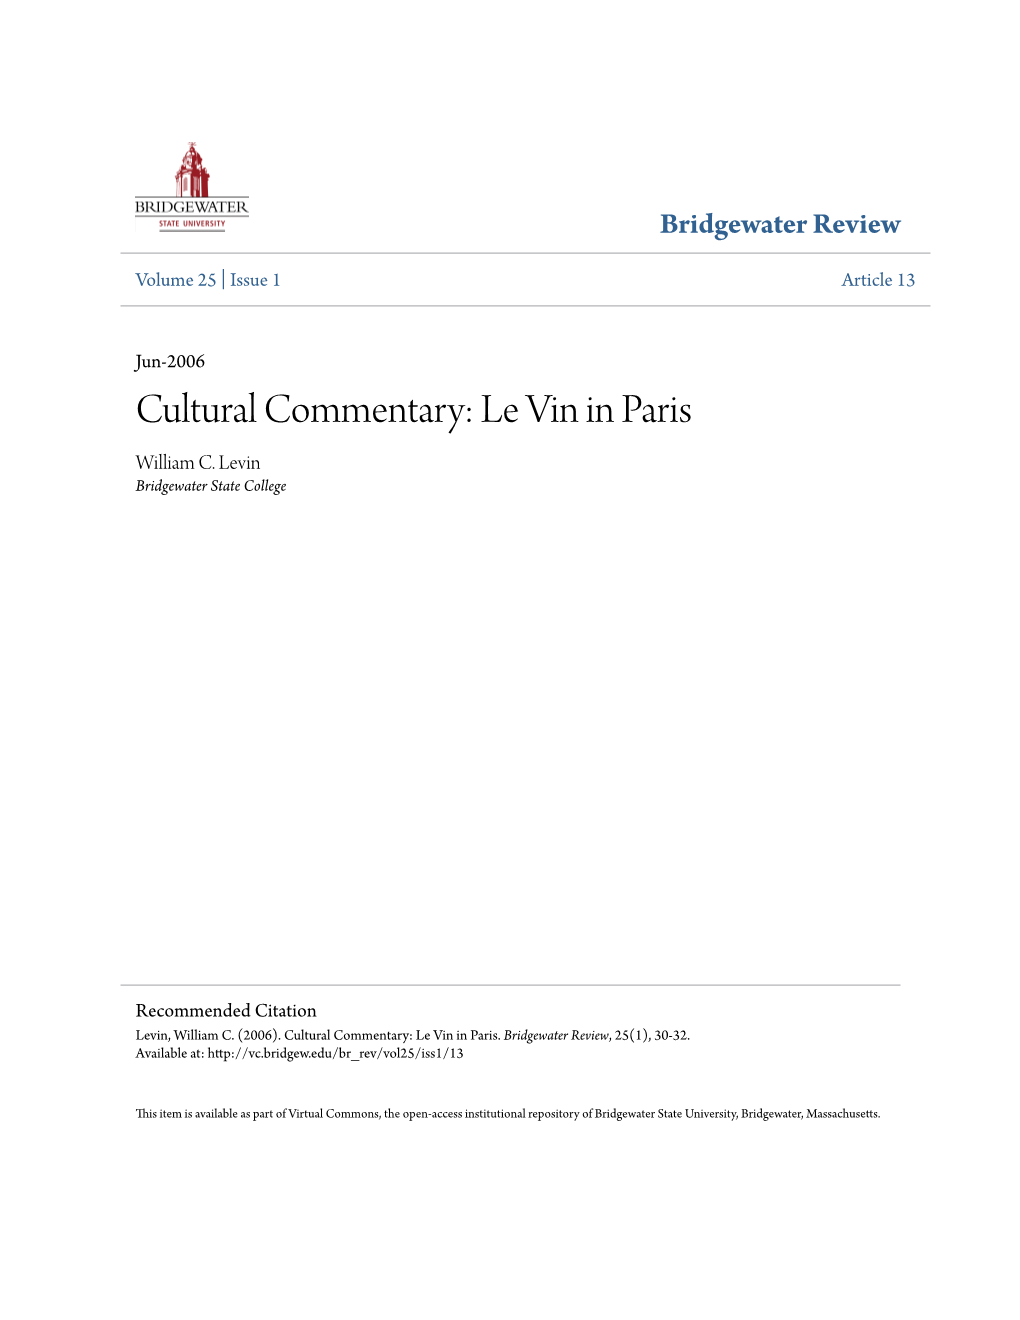 Cultural Commentary: Le Vin in Paris William C